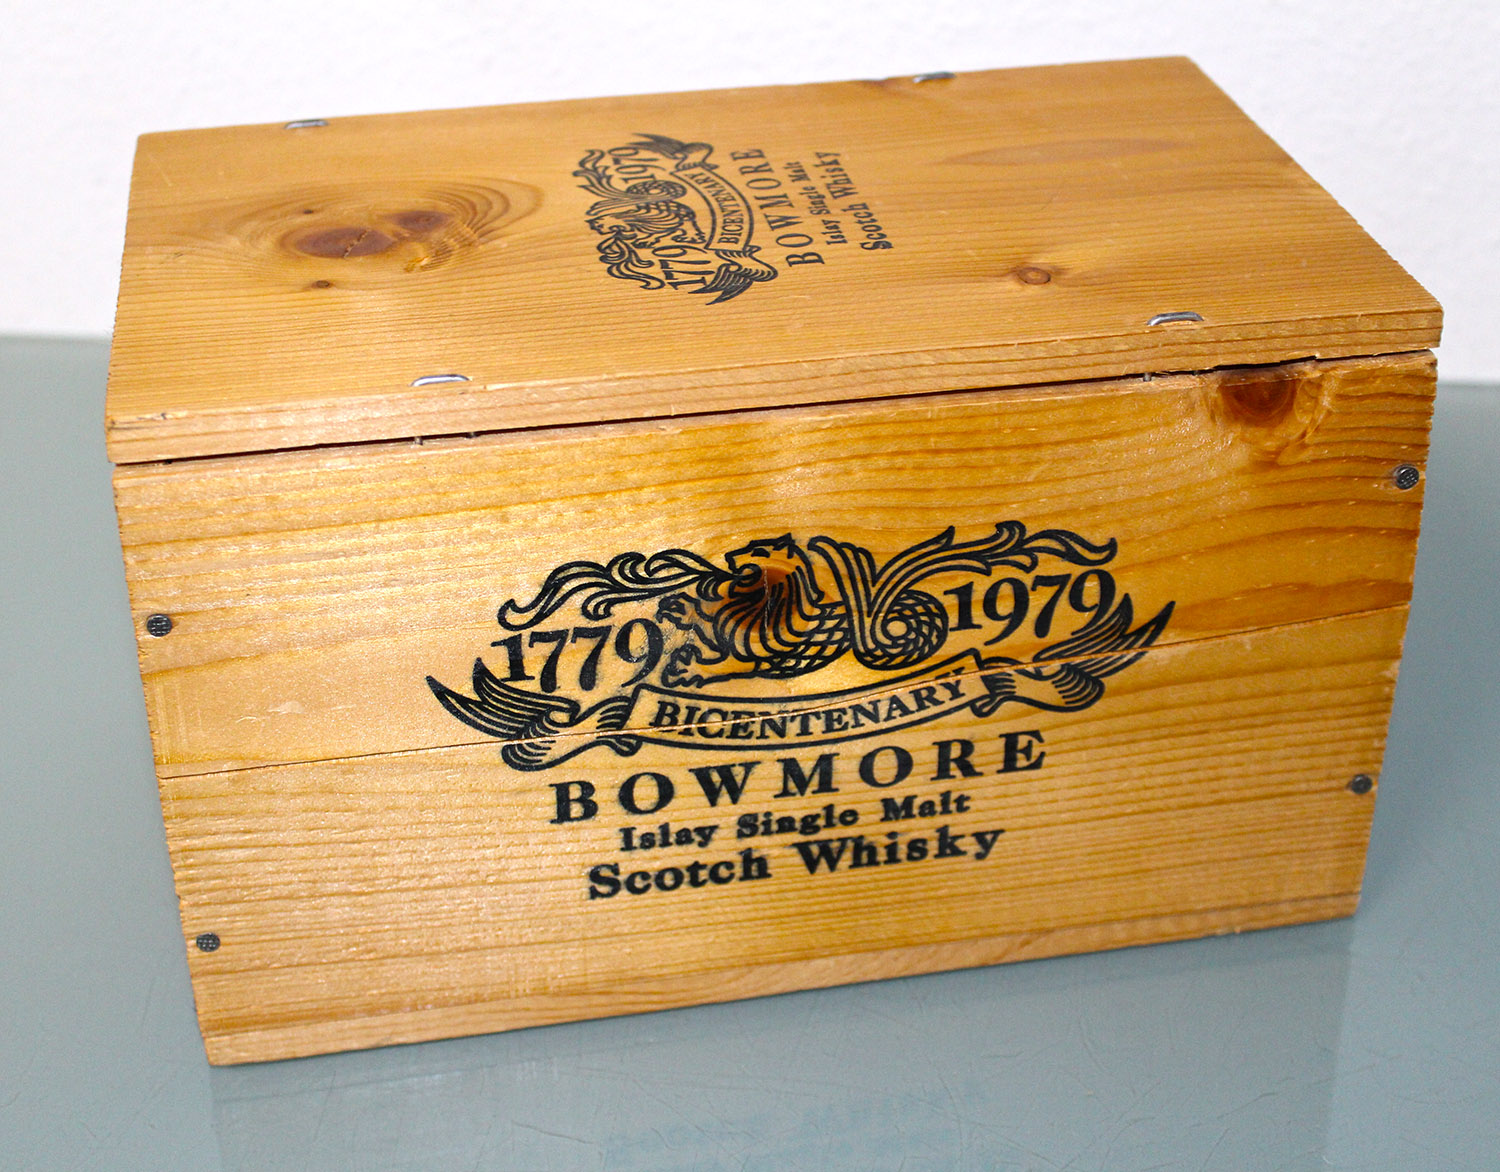 Bowmore Bicentenary Bottled 1979 Scotch Whisky Box Closed